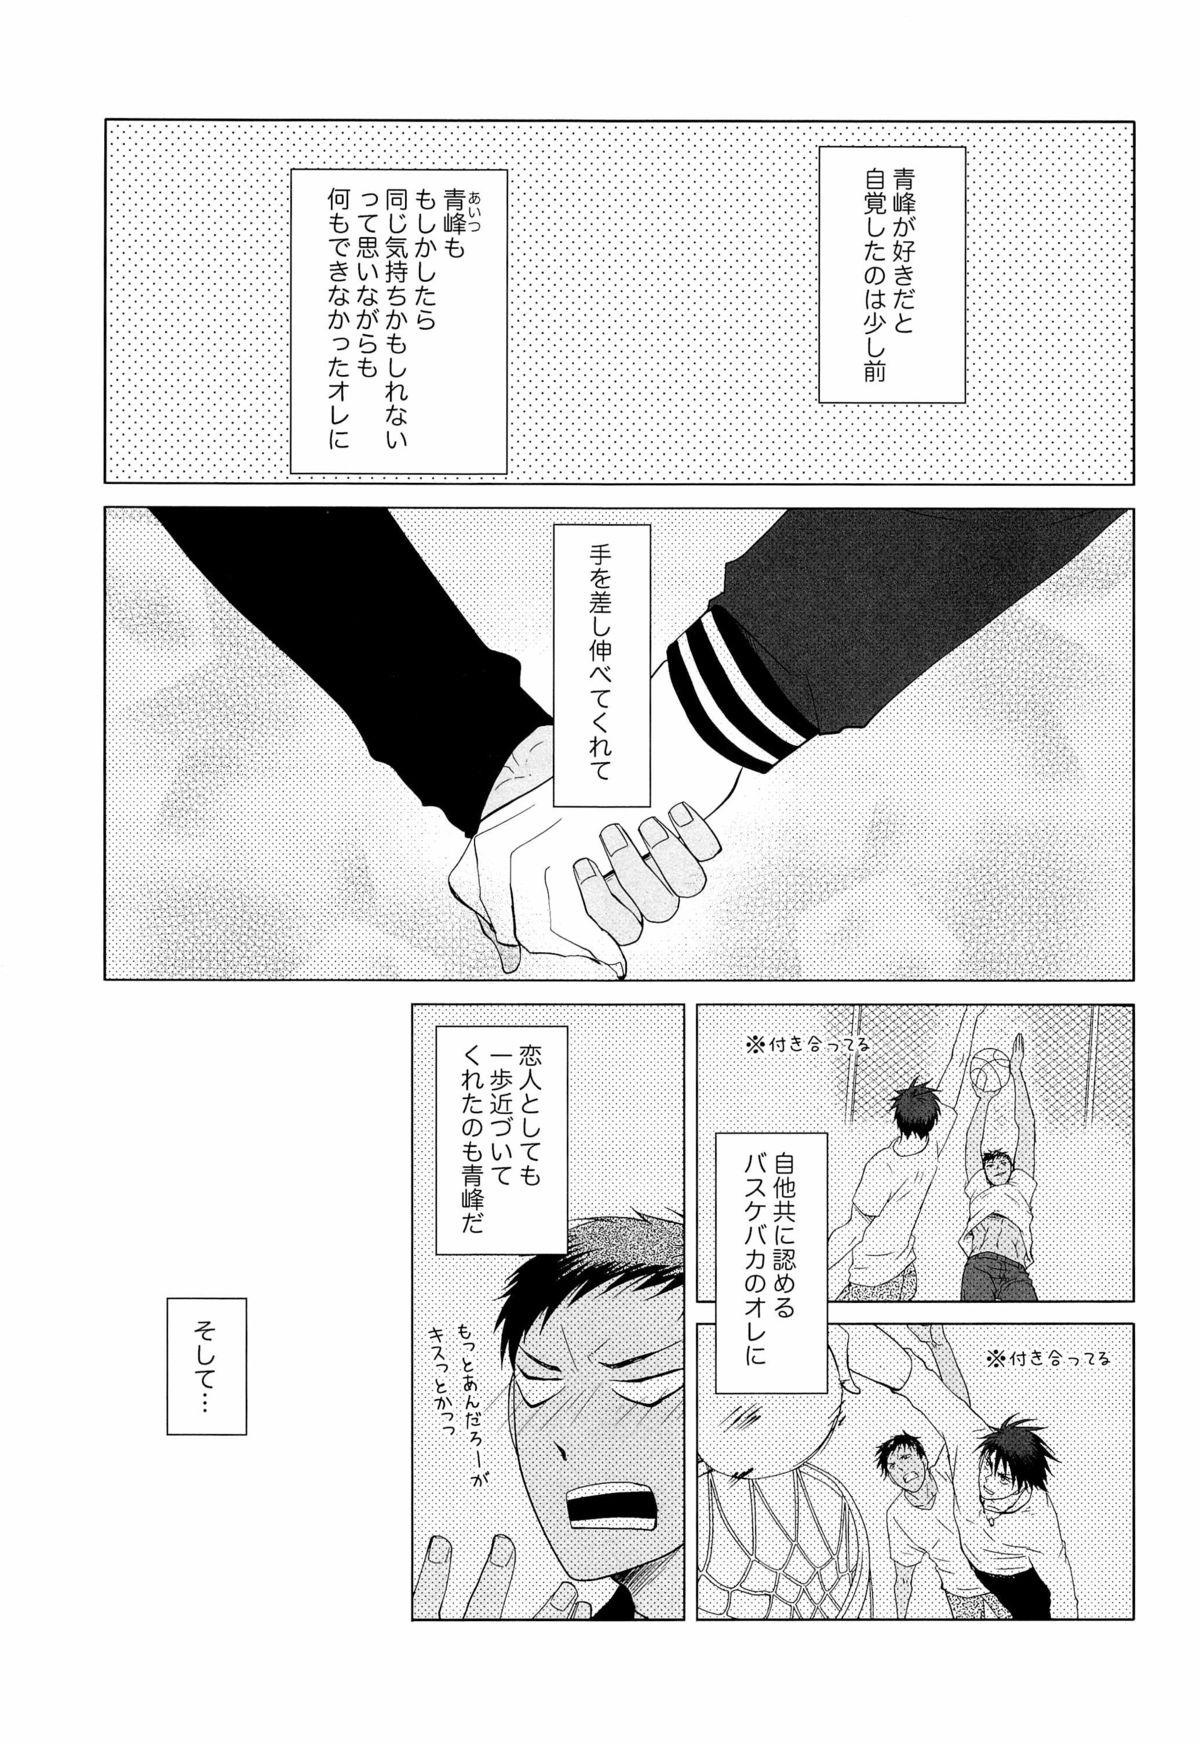 Best Blowjob あおみねと付き合ってる、ます。 - Kuroko no basuke Korea - Page 5